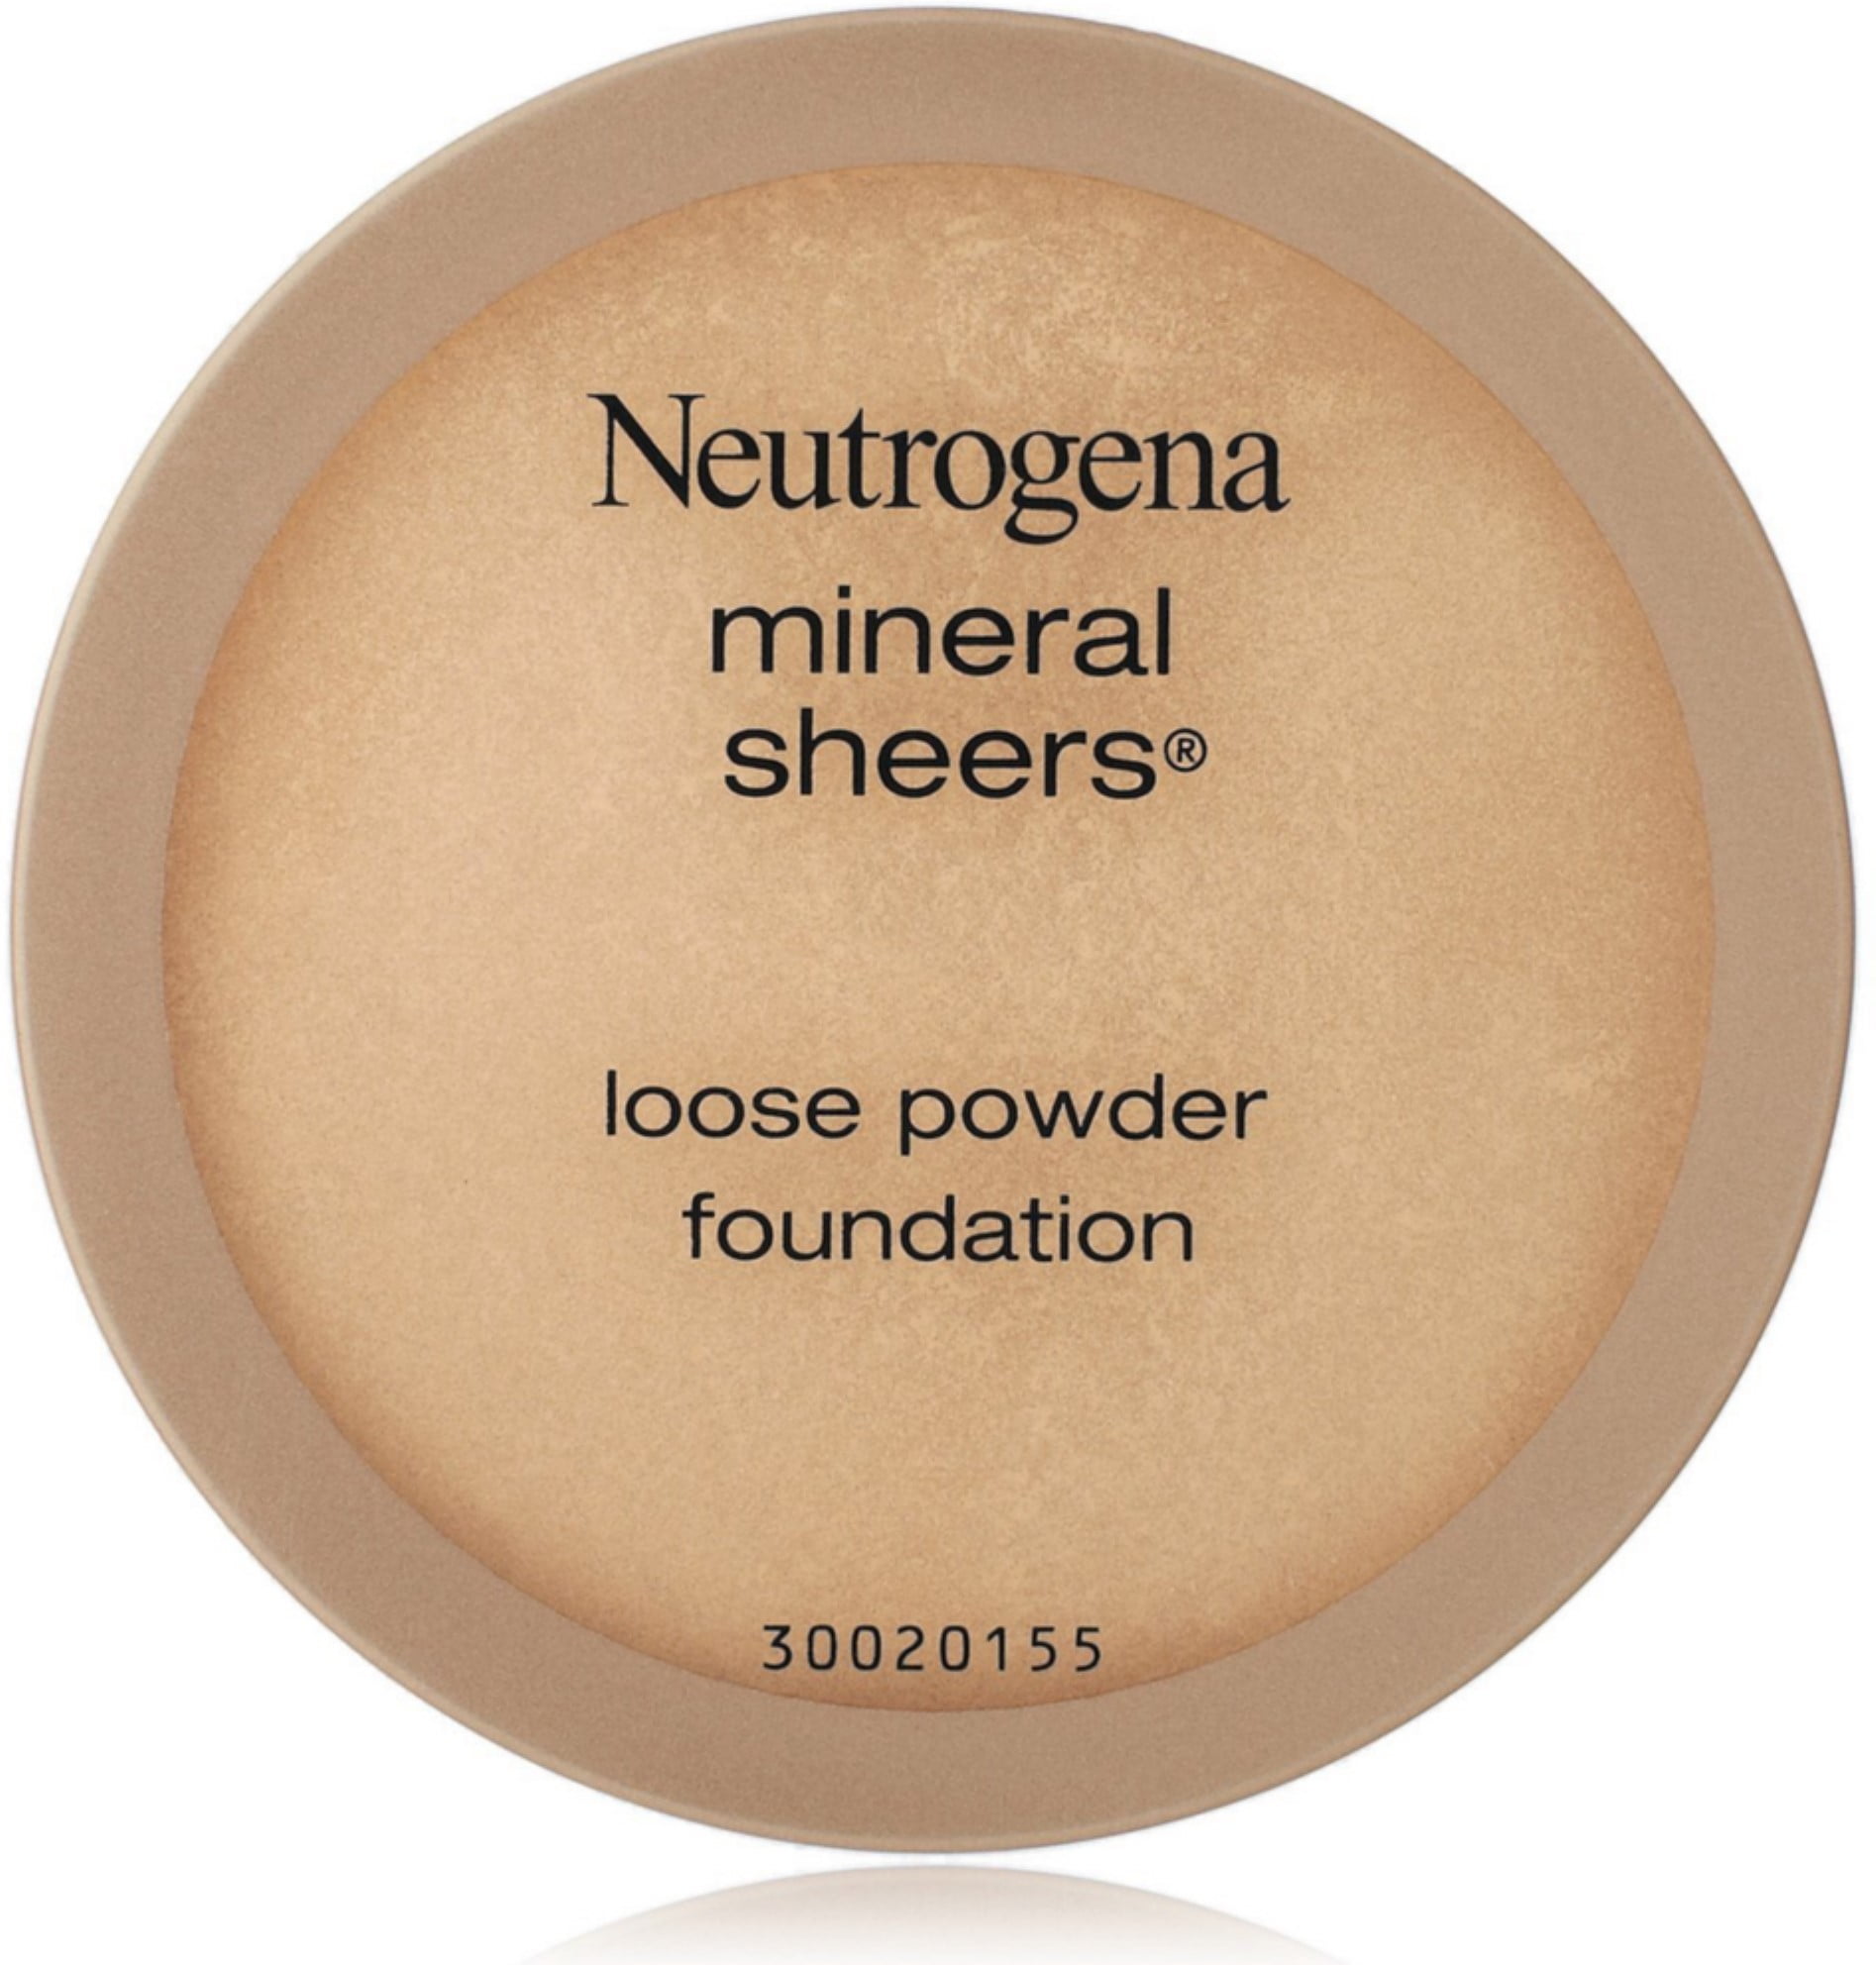 Arrives by Tue, Dec 28 Buy Neutrogena Mineral Sheers Loose Powder Foundatio...